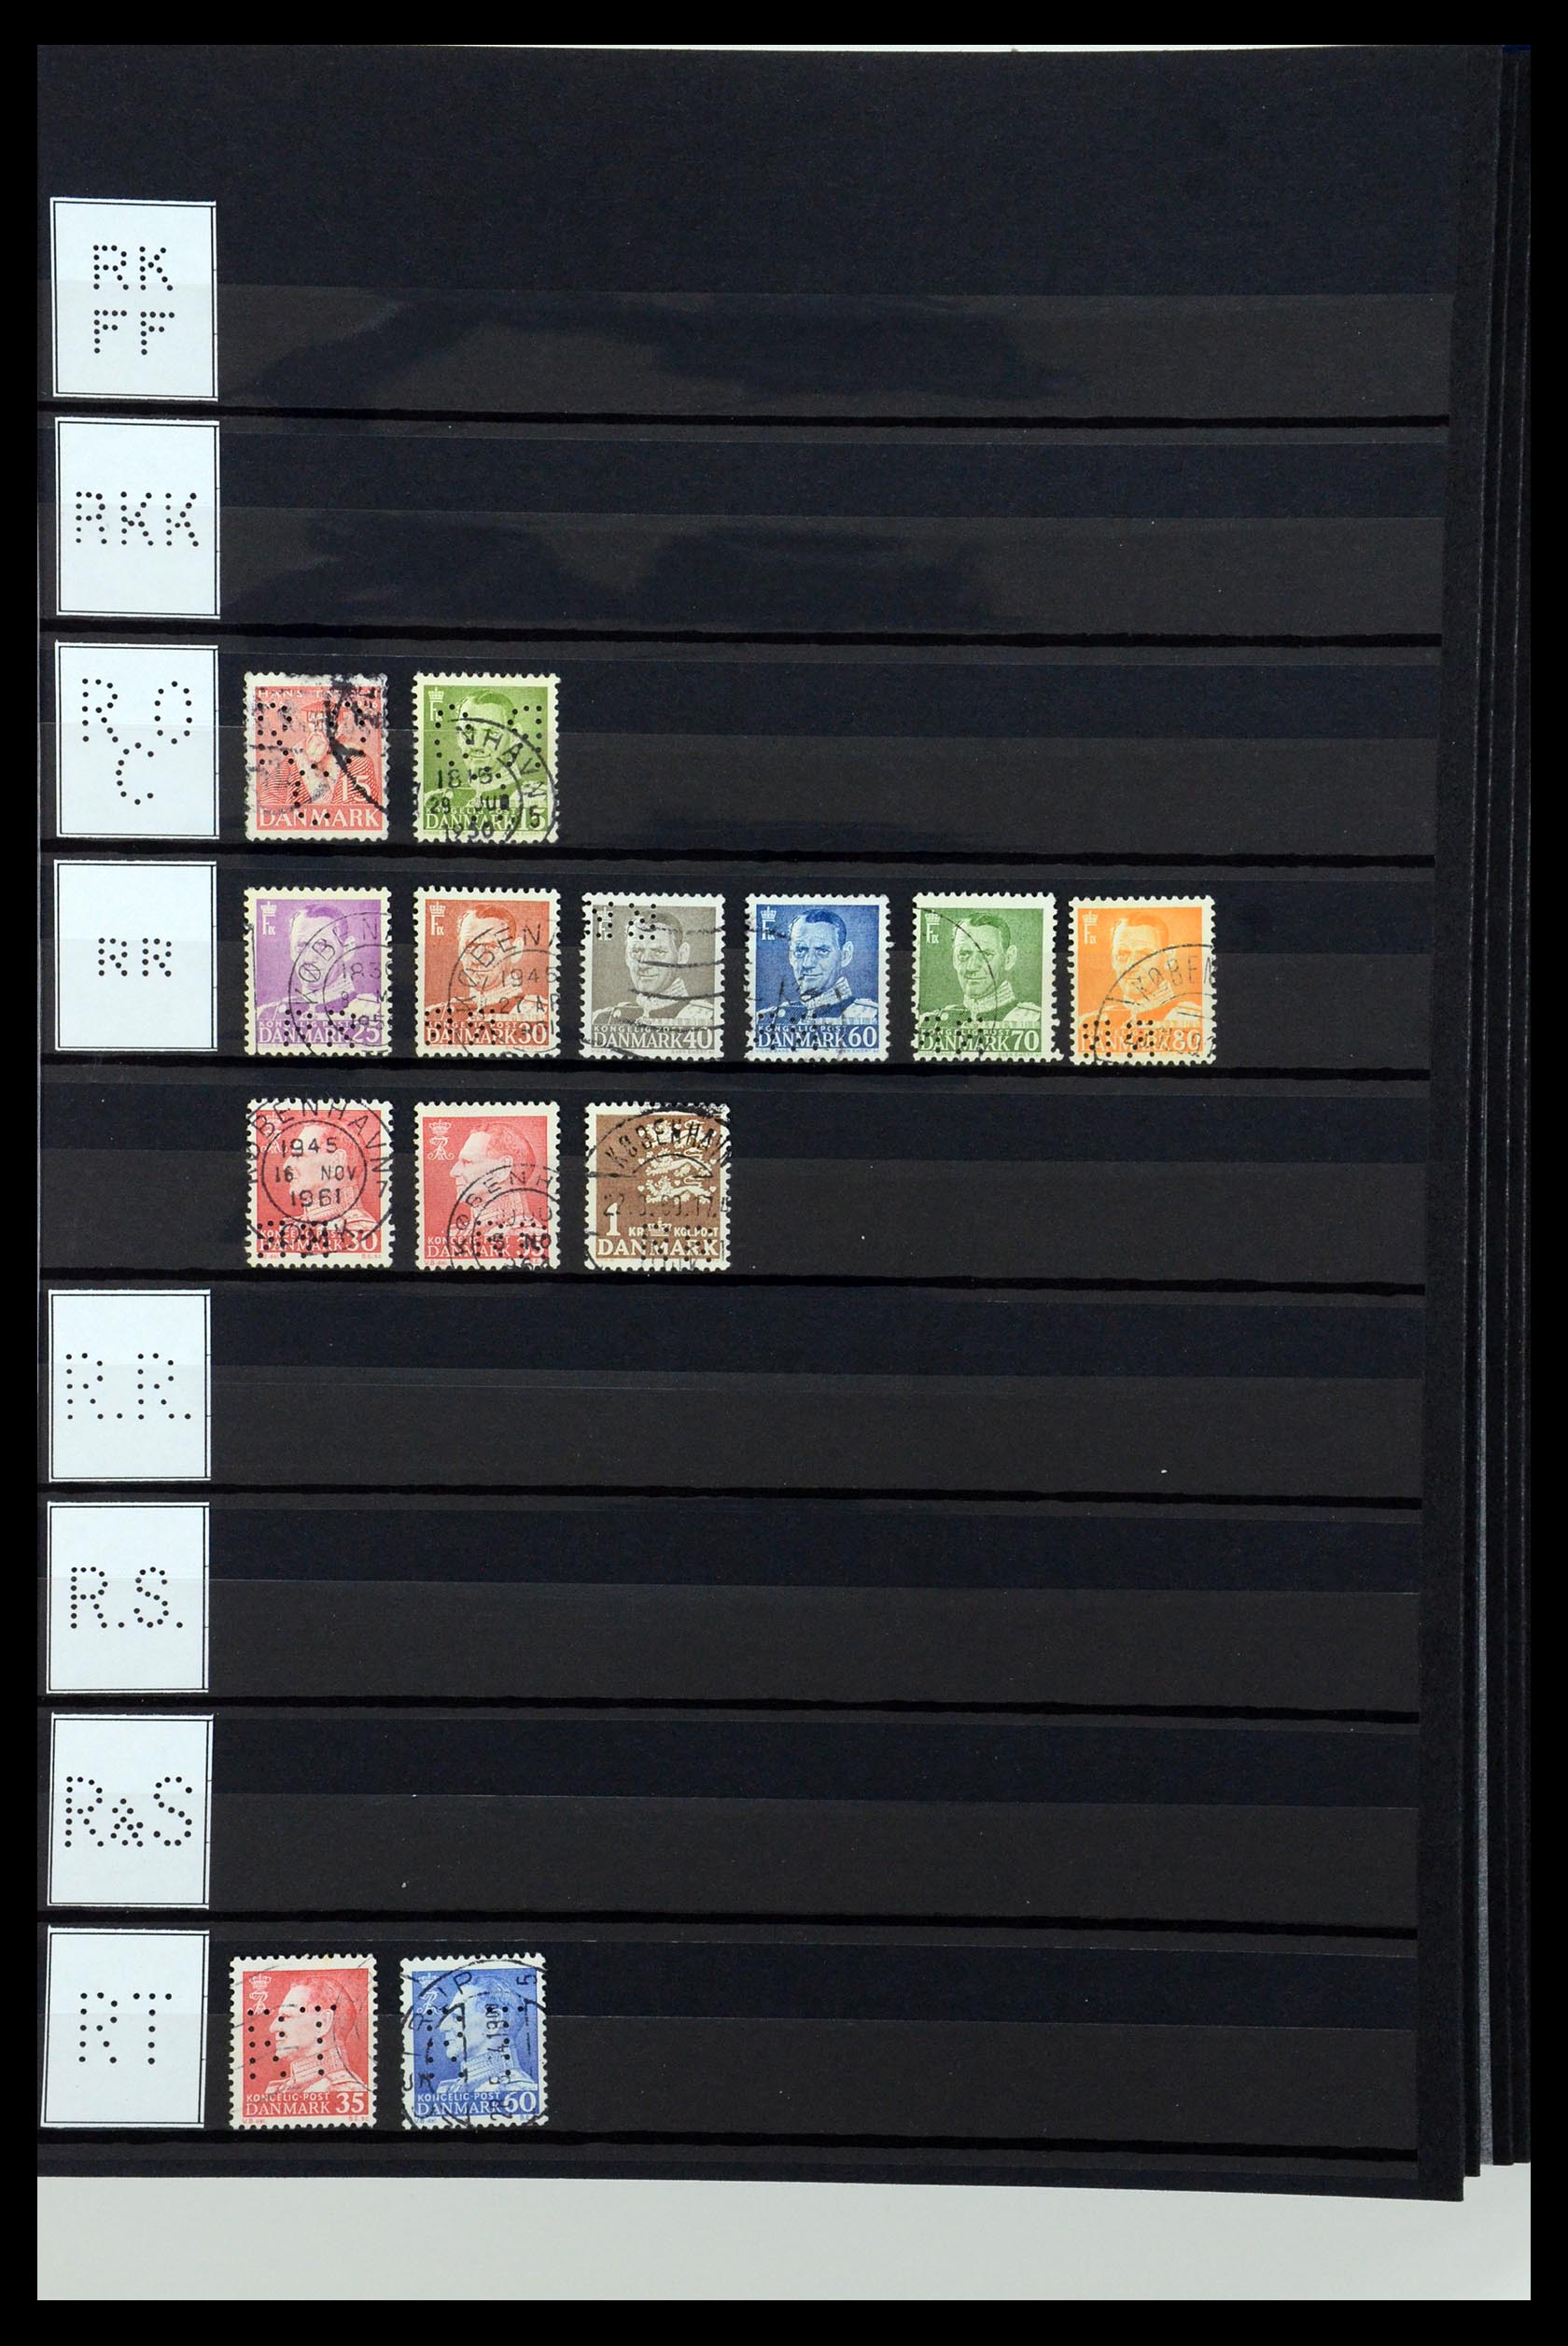 36396 199 - Stamp collection 36396 Denmark perfins.